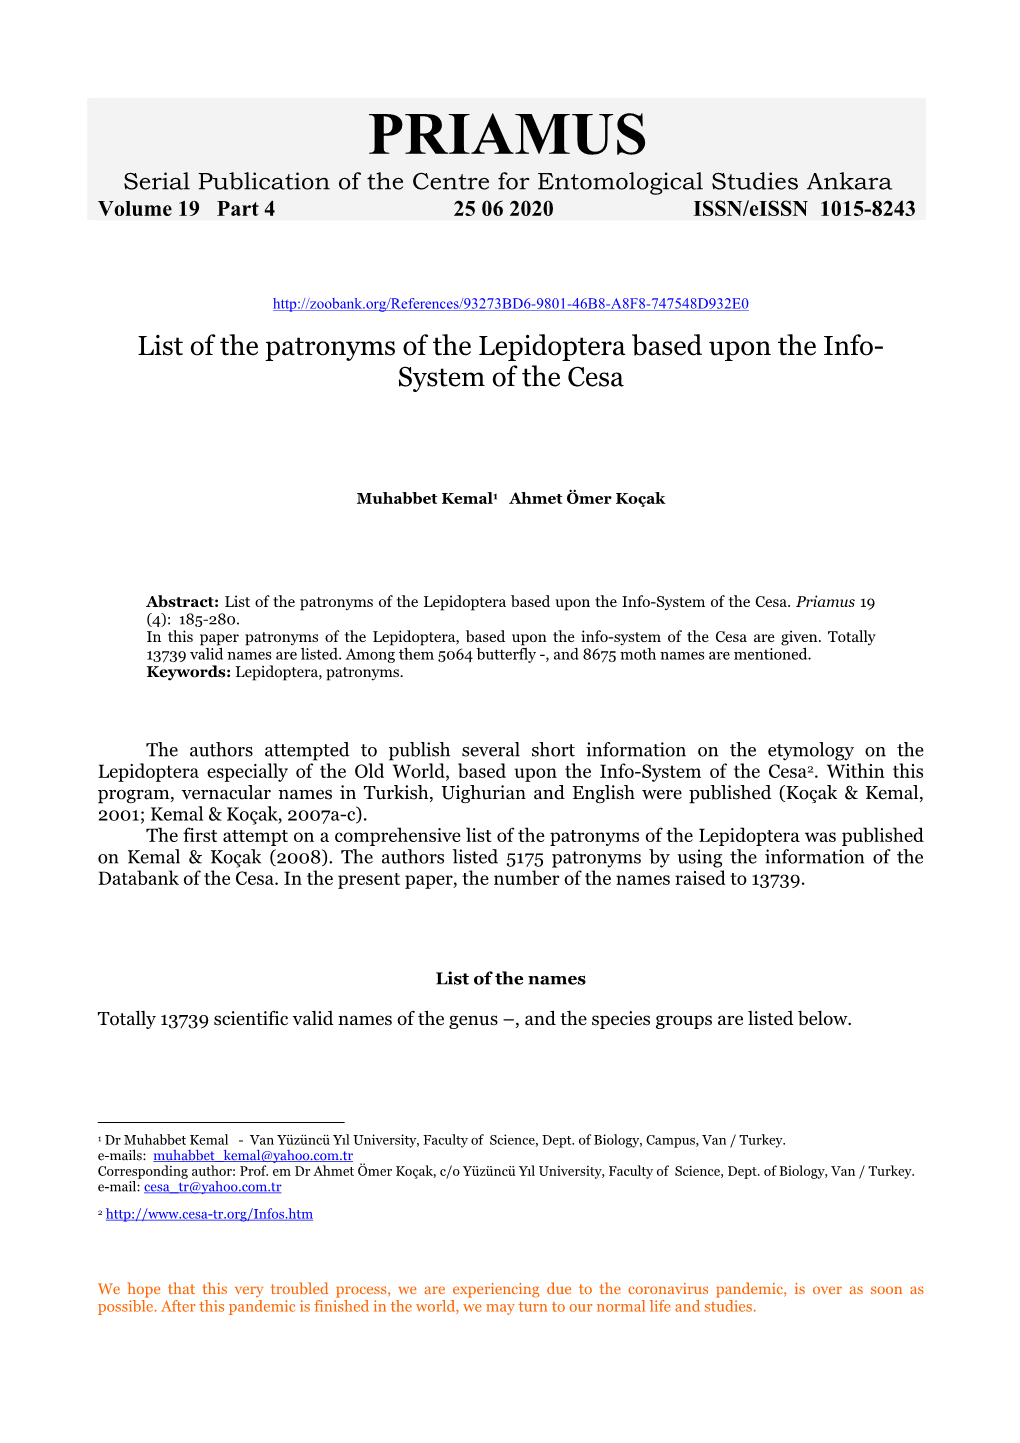 PRIAMUS Serial Publication of the Centre for Entomological Studies Ankara Volume 19 Part 4 25 06 2020 ISSN/Eissn 1015-8243